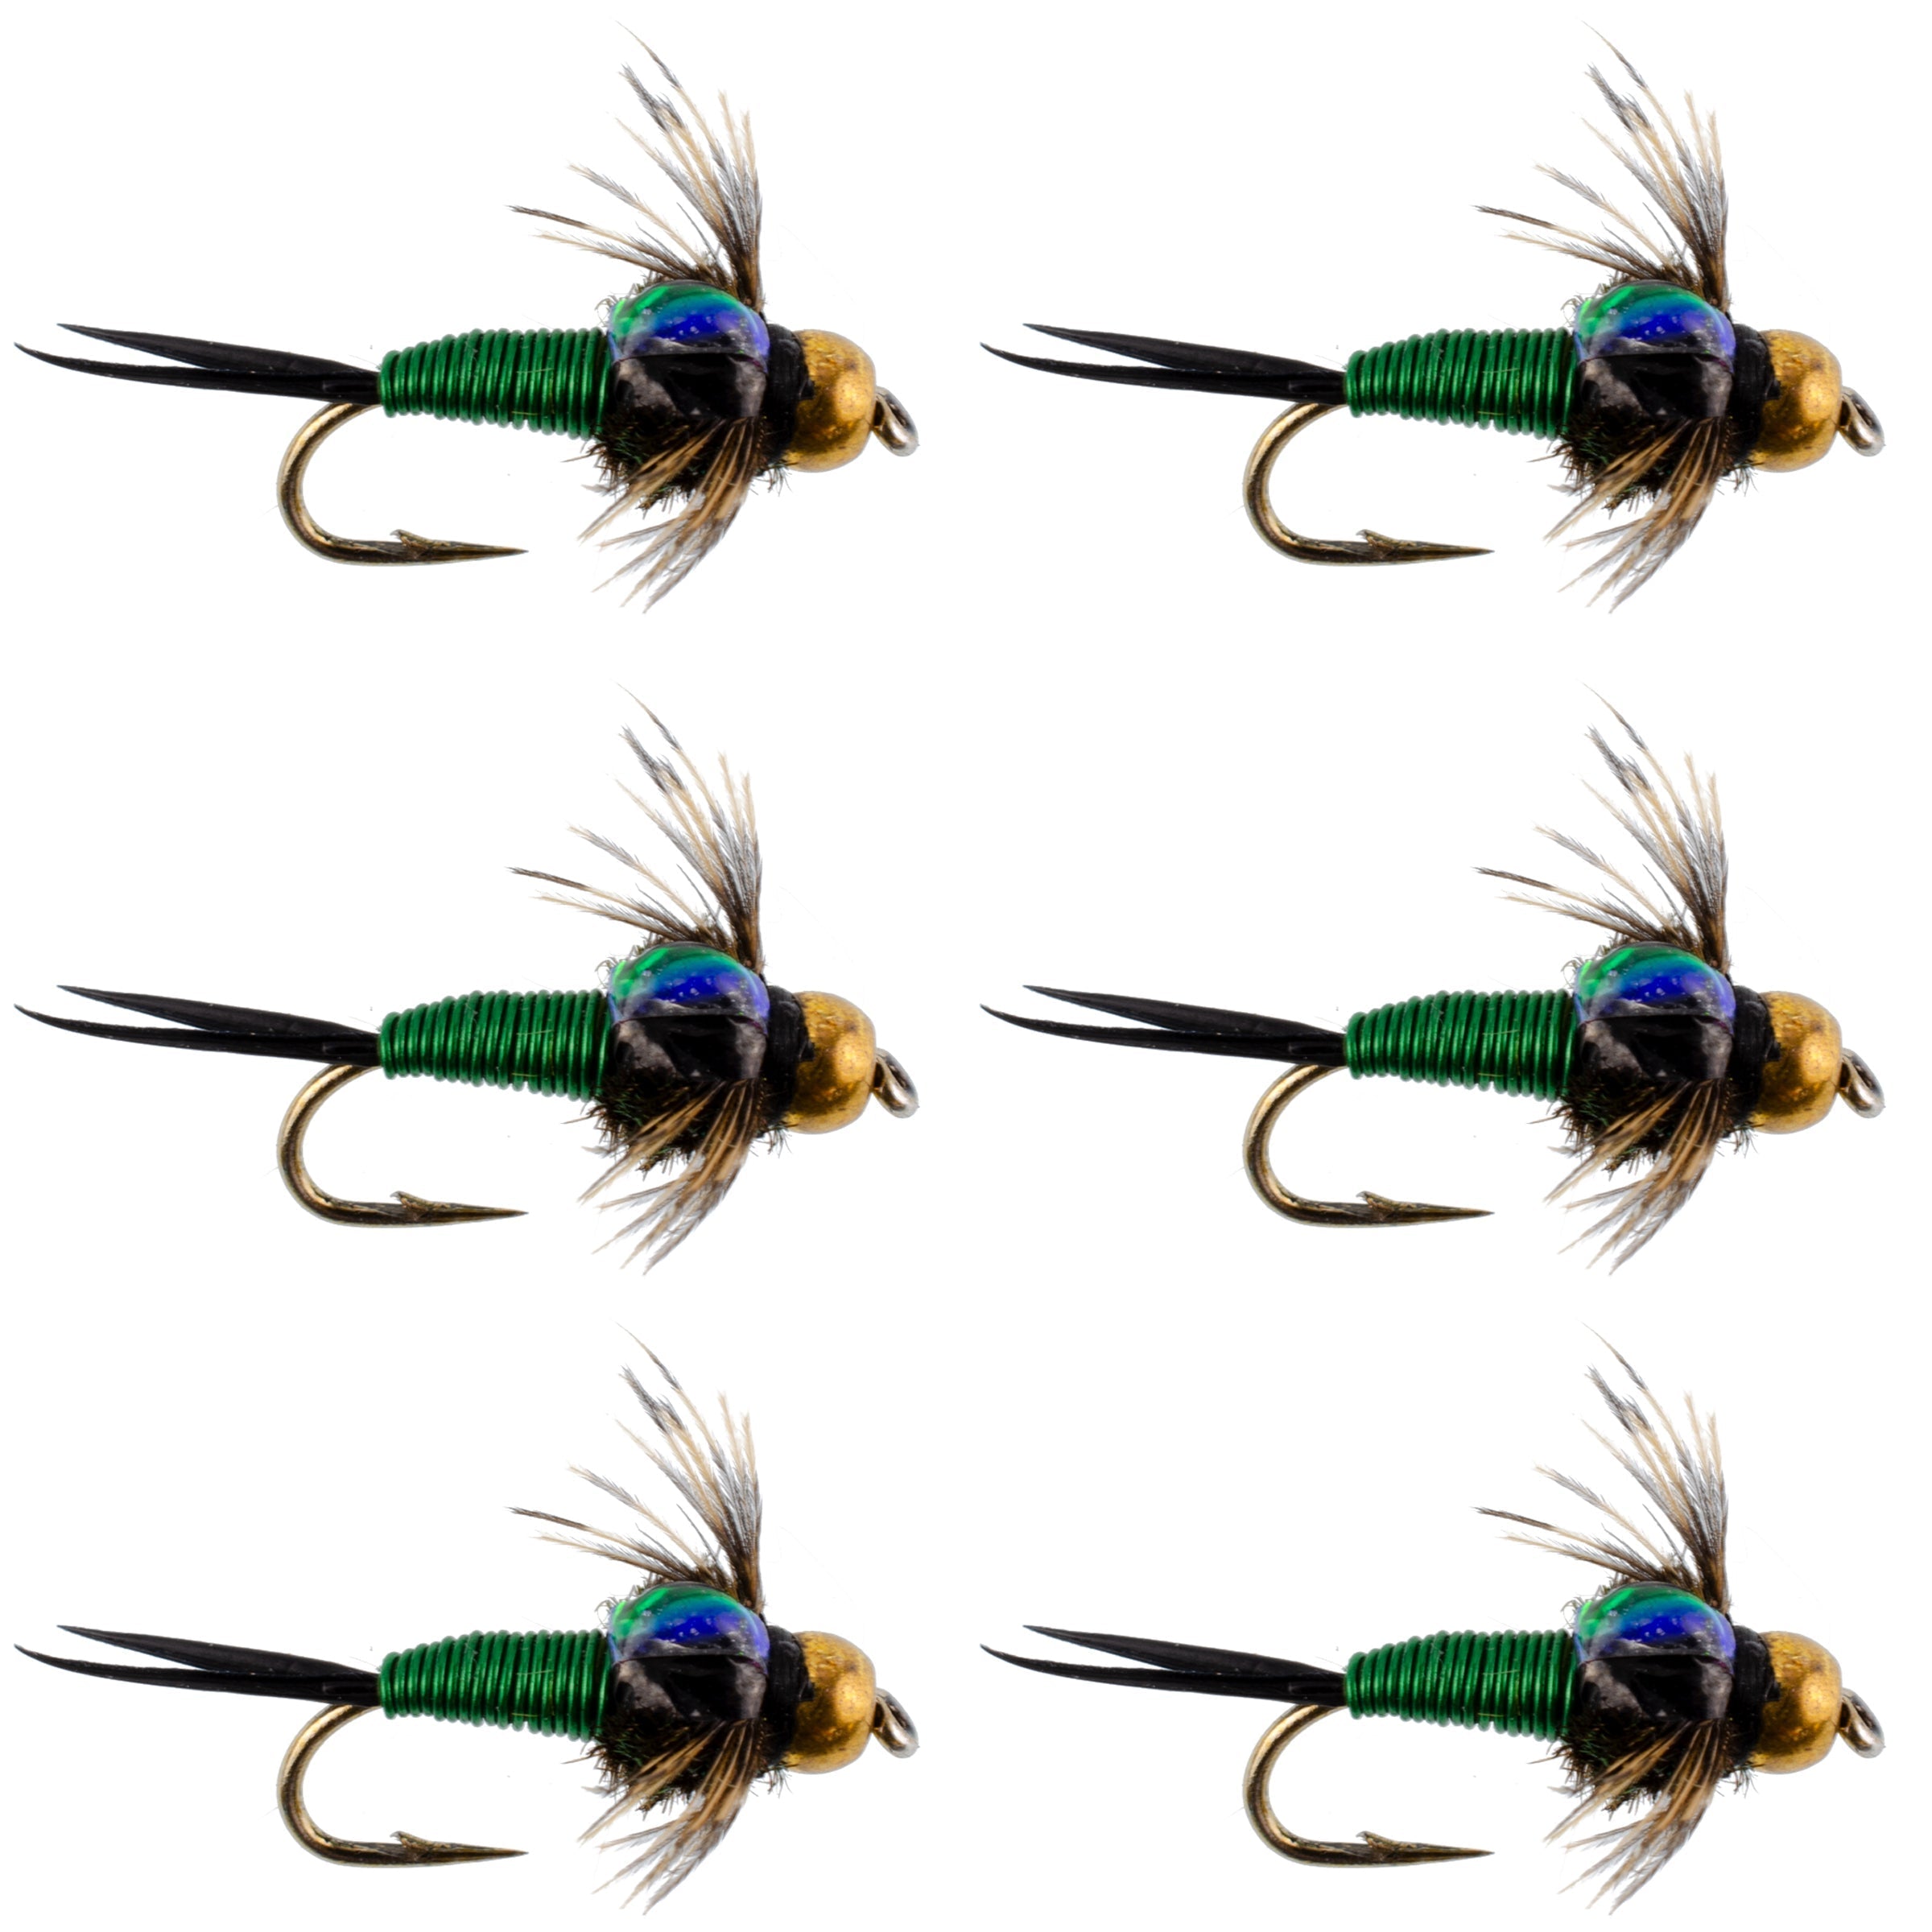 Moscas de pesca con mosca John Nymph de cobre verde con cabeza de cuentas, juego de 6 anzuelos para moscas, tamaño 18 